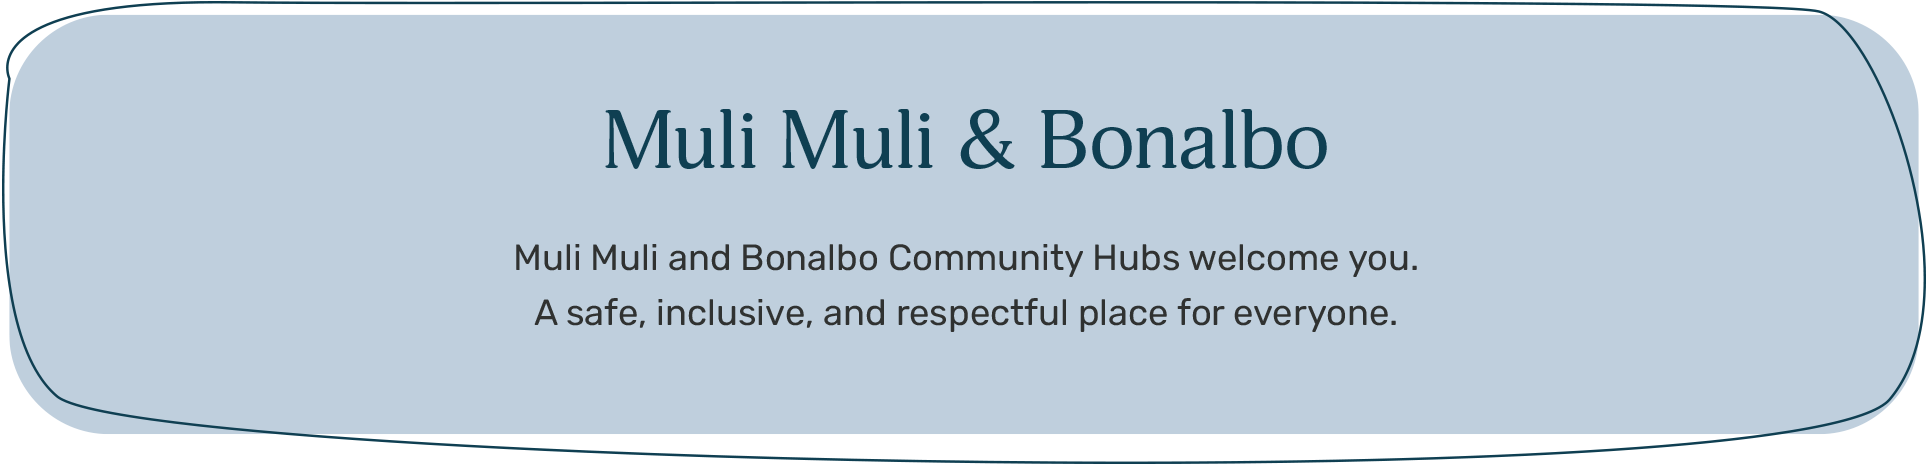 Kyogle Family Support Services - Muli Muli & Bonalbo